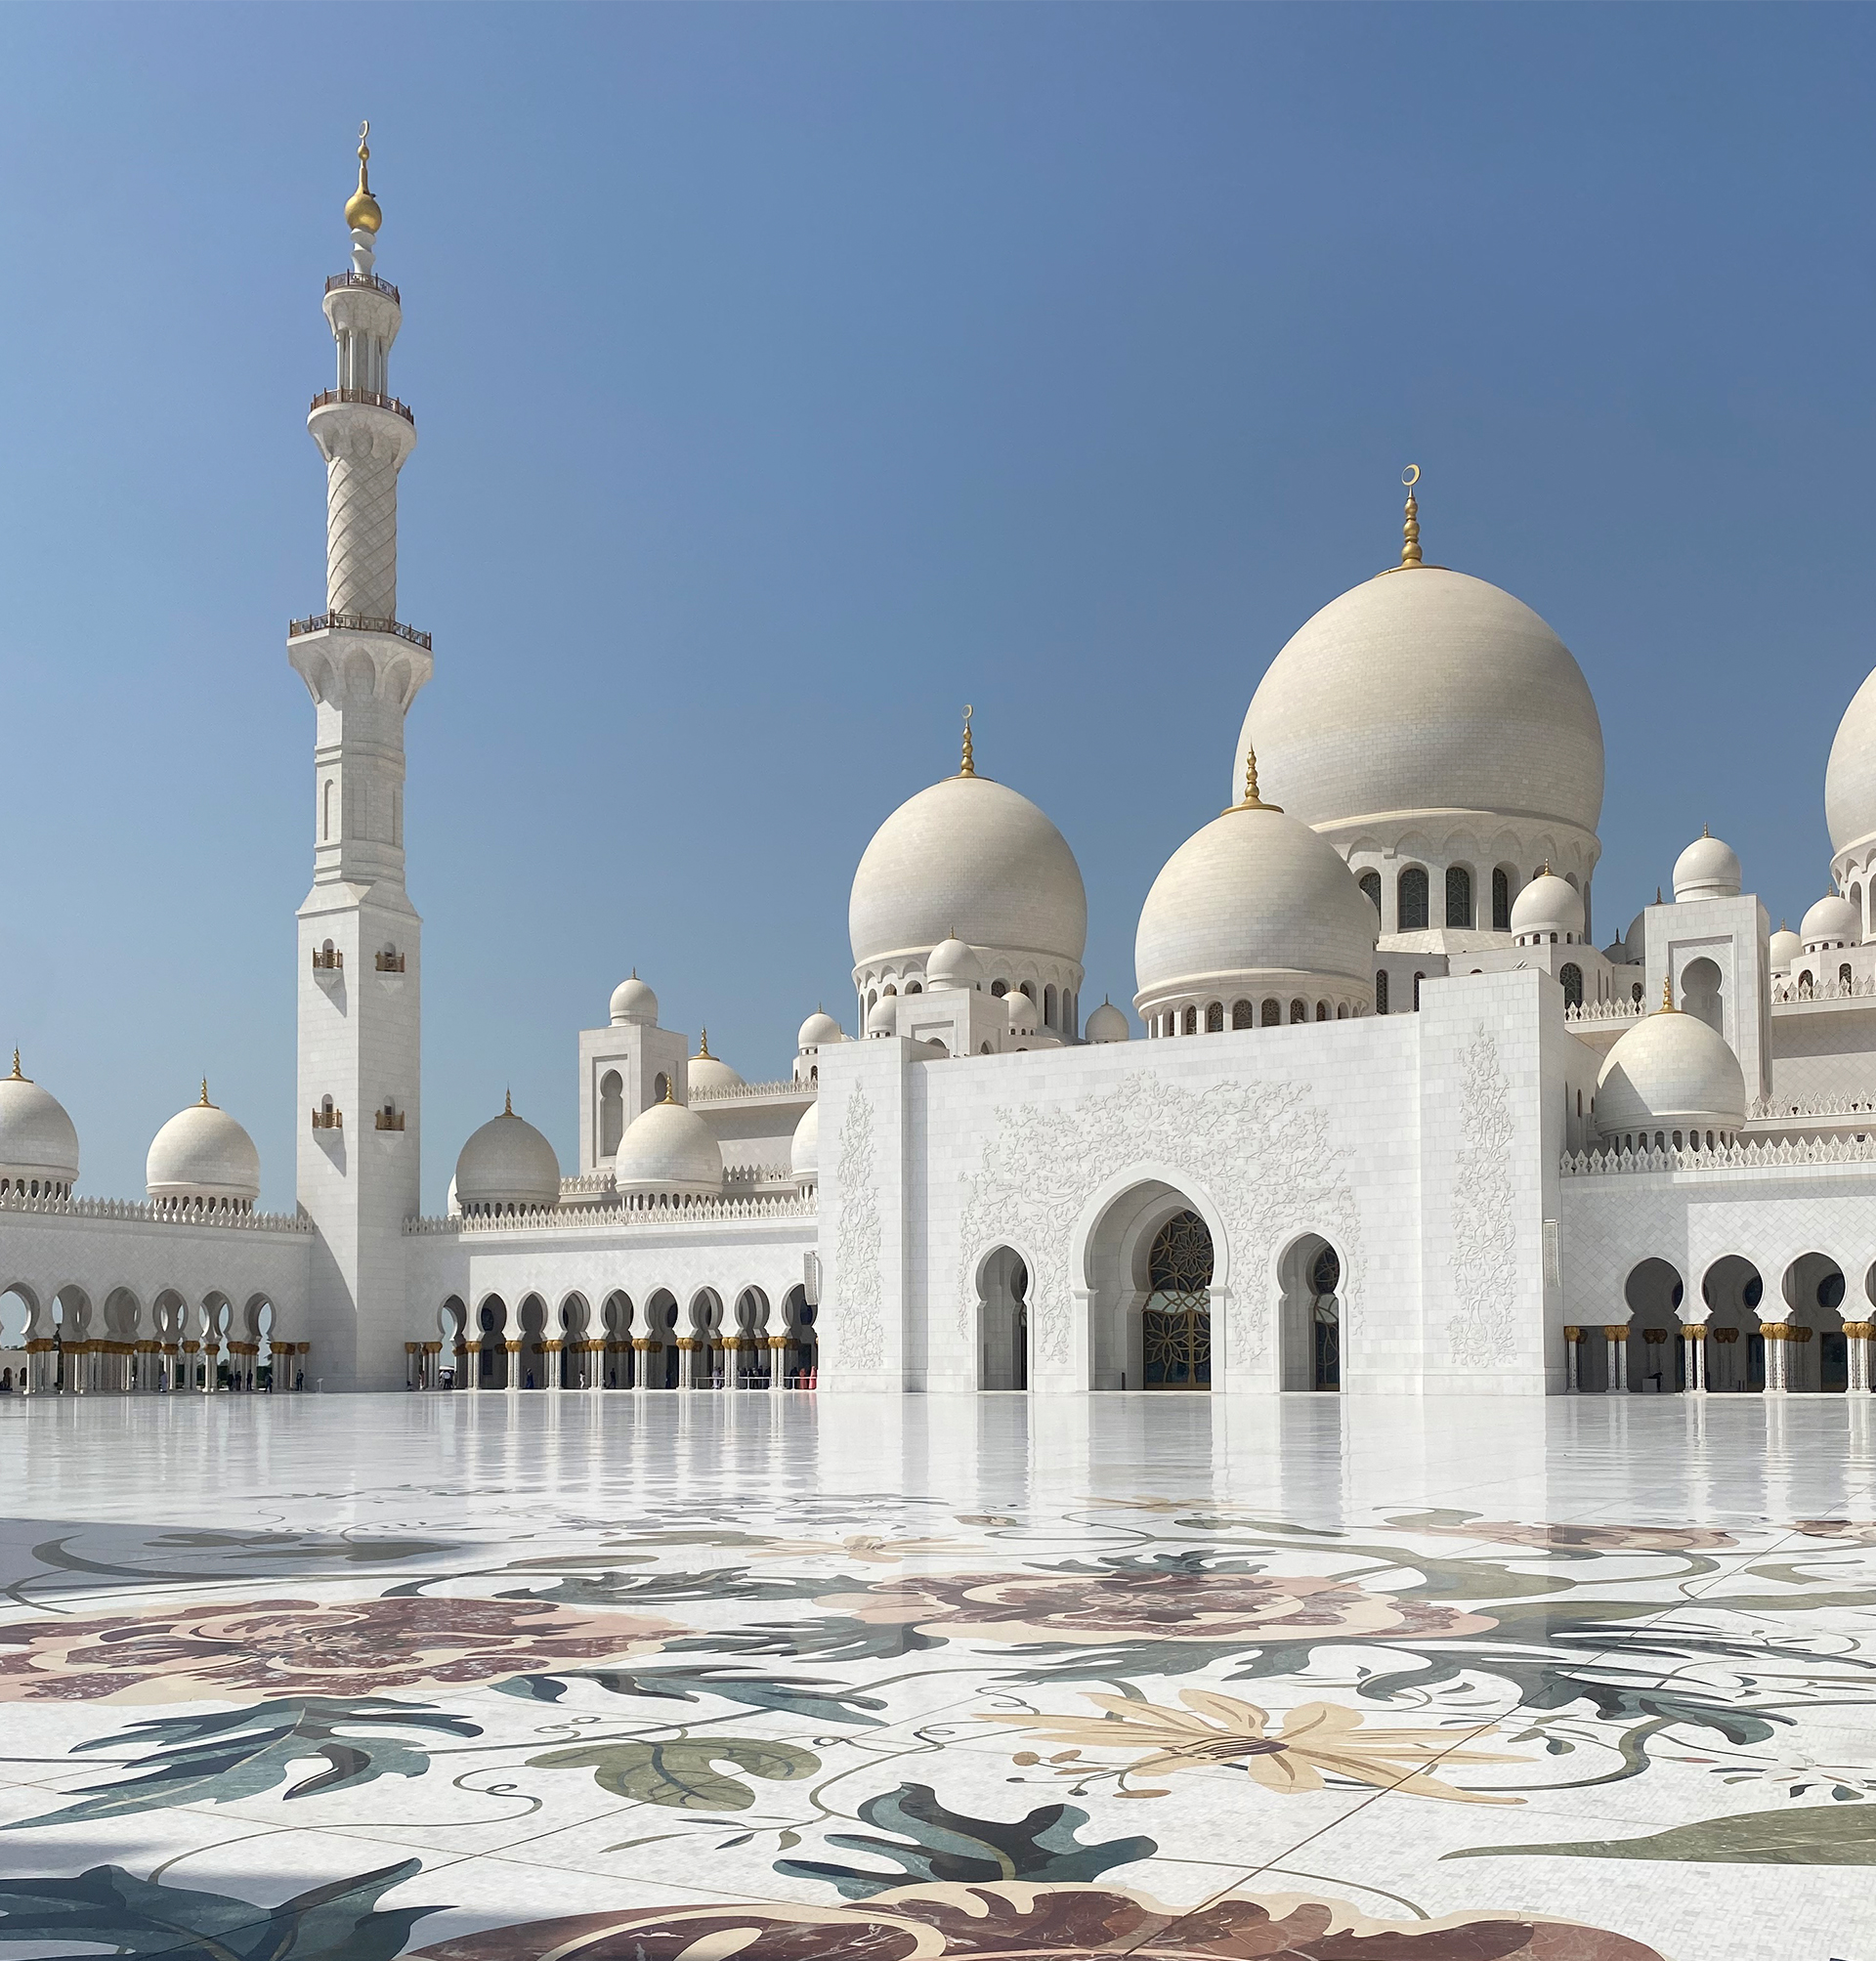 The Sheikh Zayed Grand Mosque located in Abu Dhabi, United Arab Emirates.